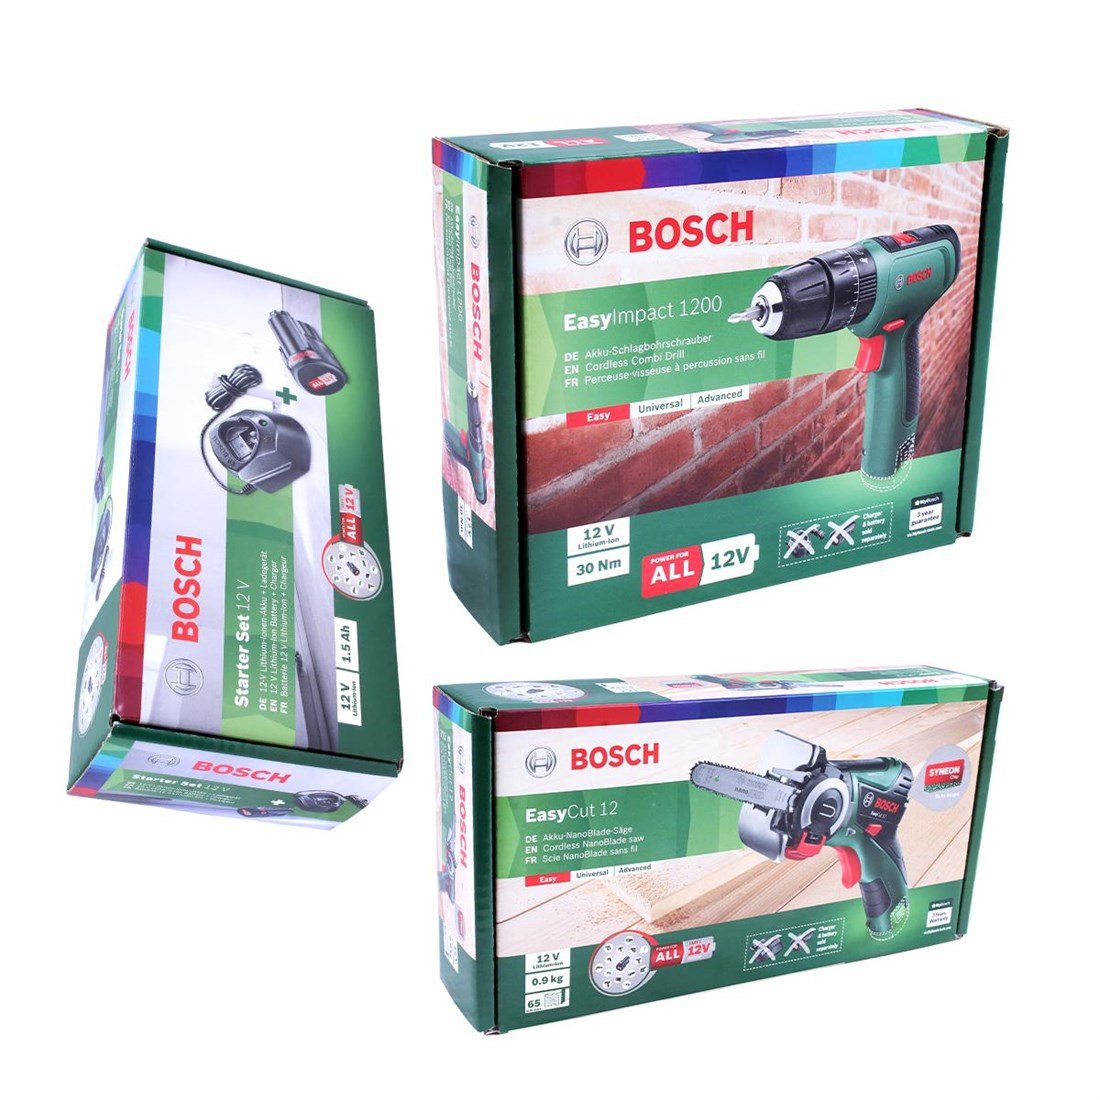 Bosch 1200 EasyImpact Darbeli Matkap + EasyCut 12 Solo + 12V Akü ve Sarj  Aleti